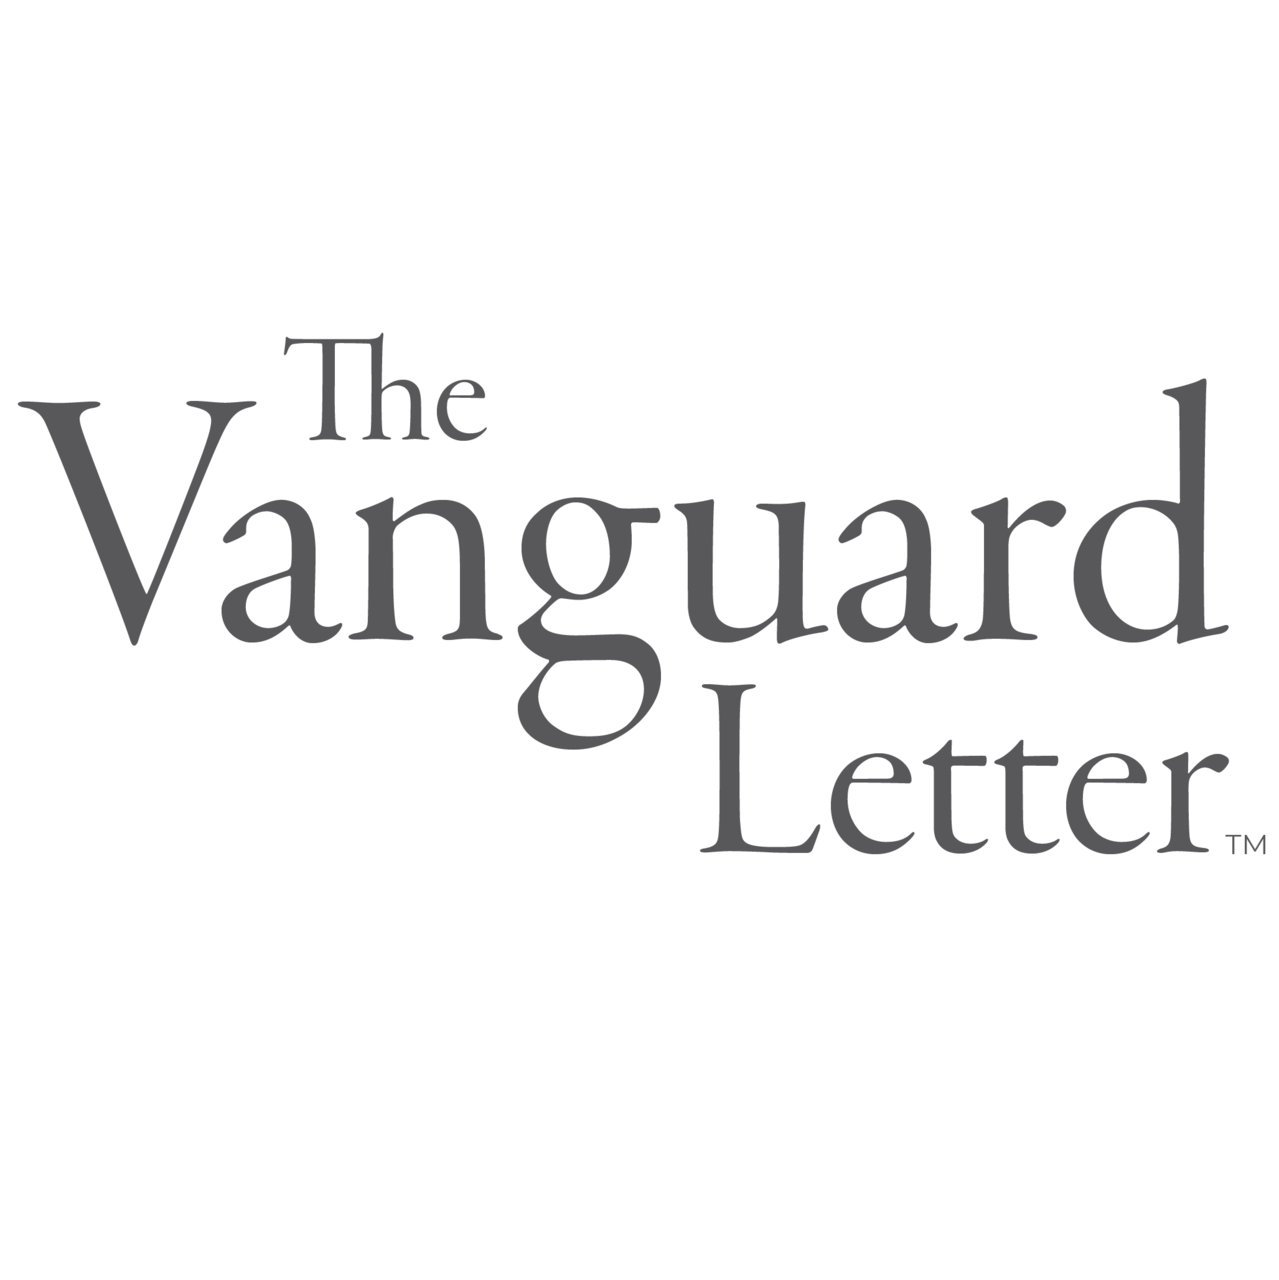 The Vanguard Letter